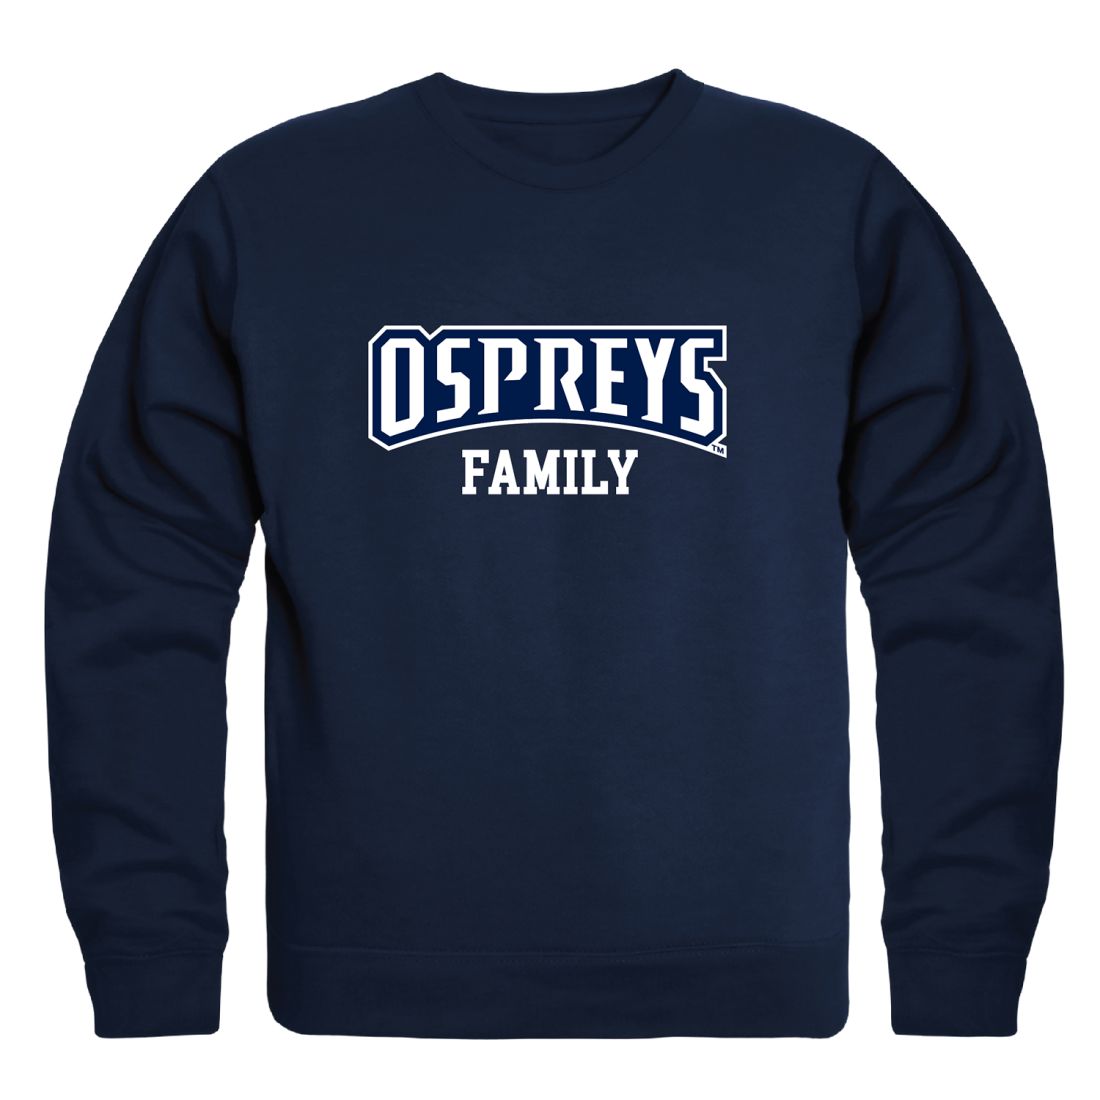 UNF-University-of-North-Florida-Osprey-Family-Fleece-Crewneck-Pullover-Sweatshirt